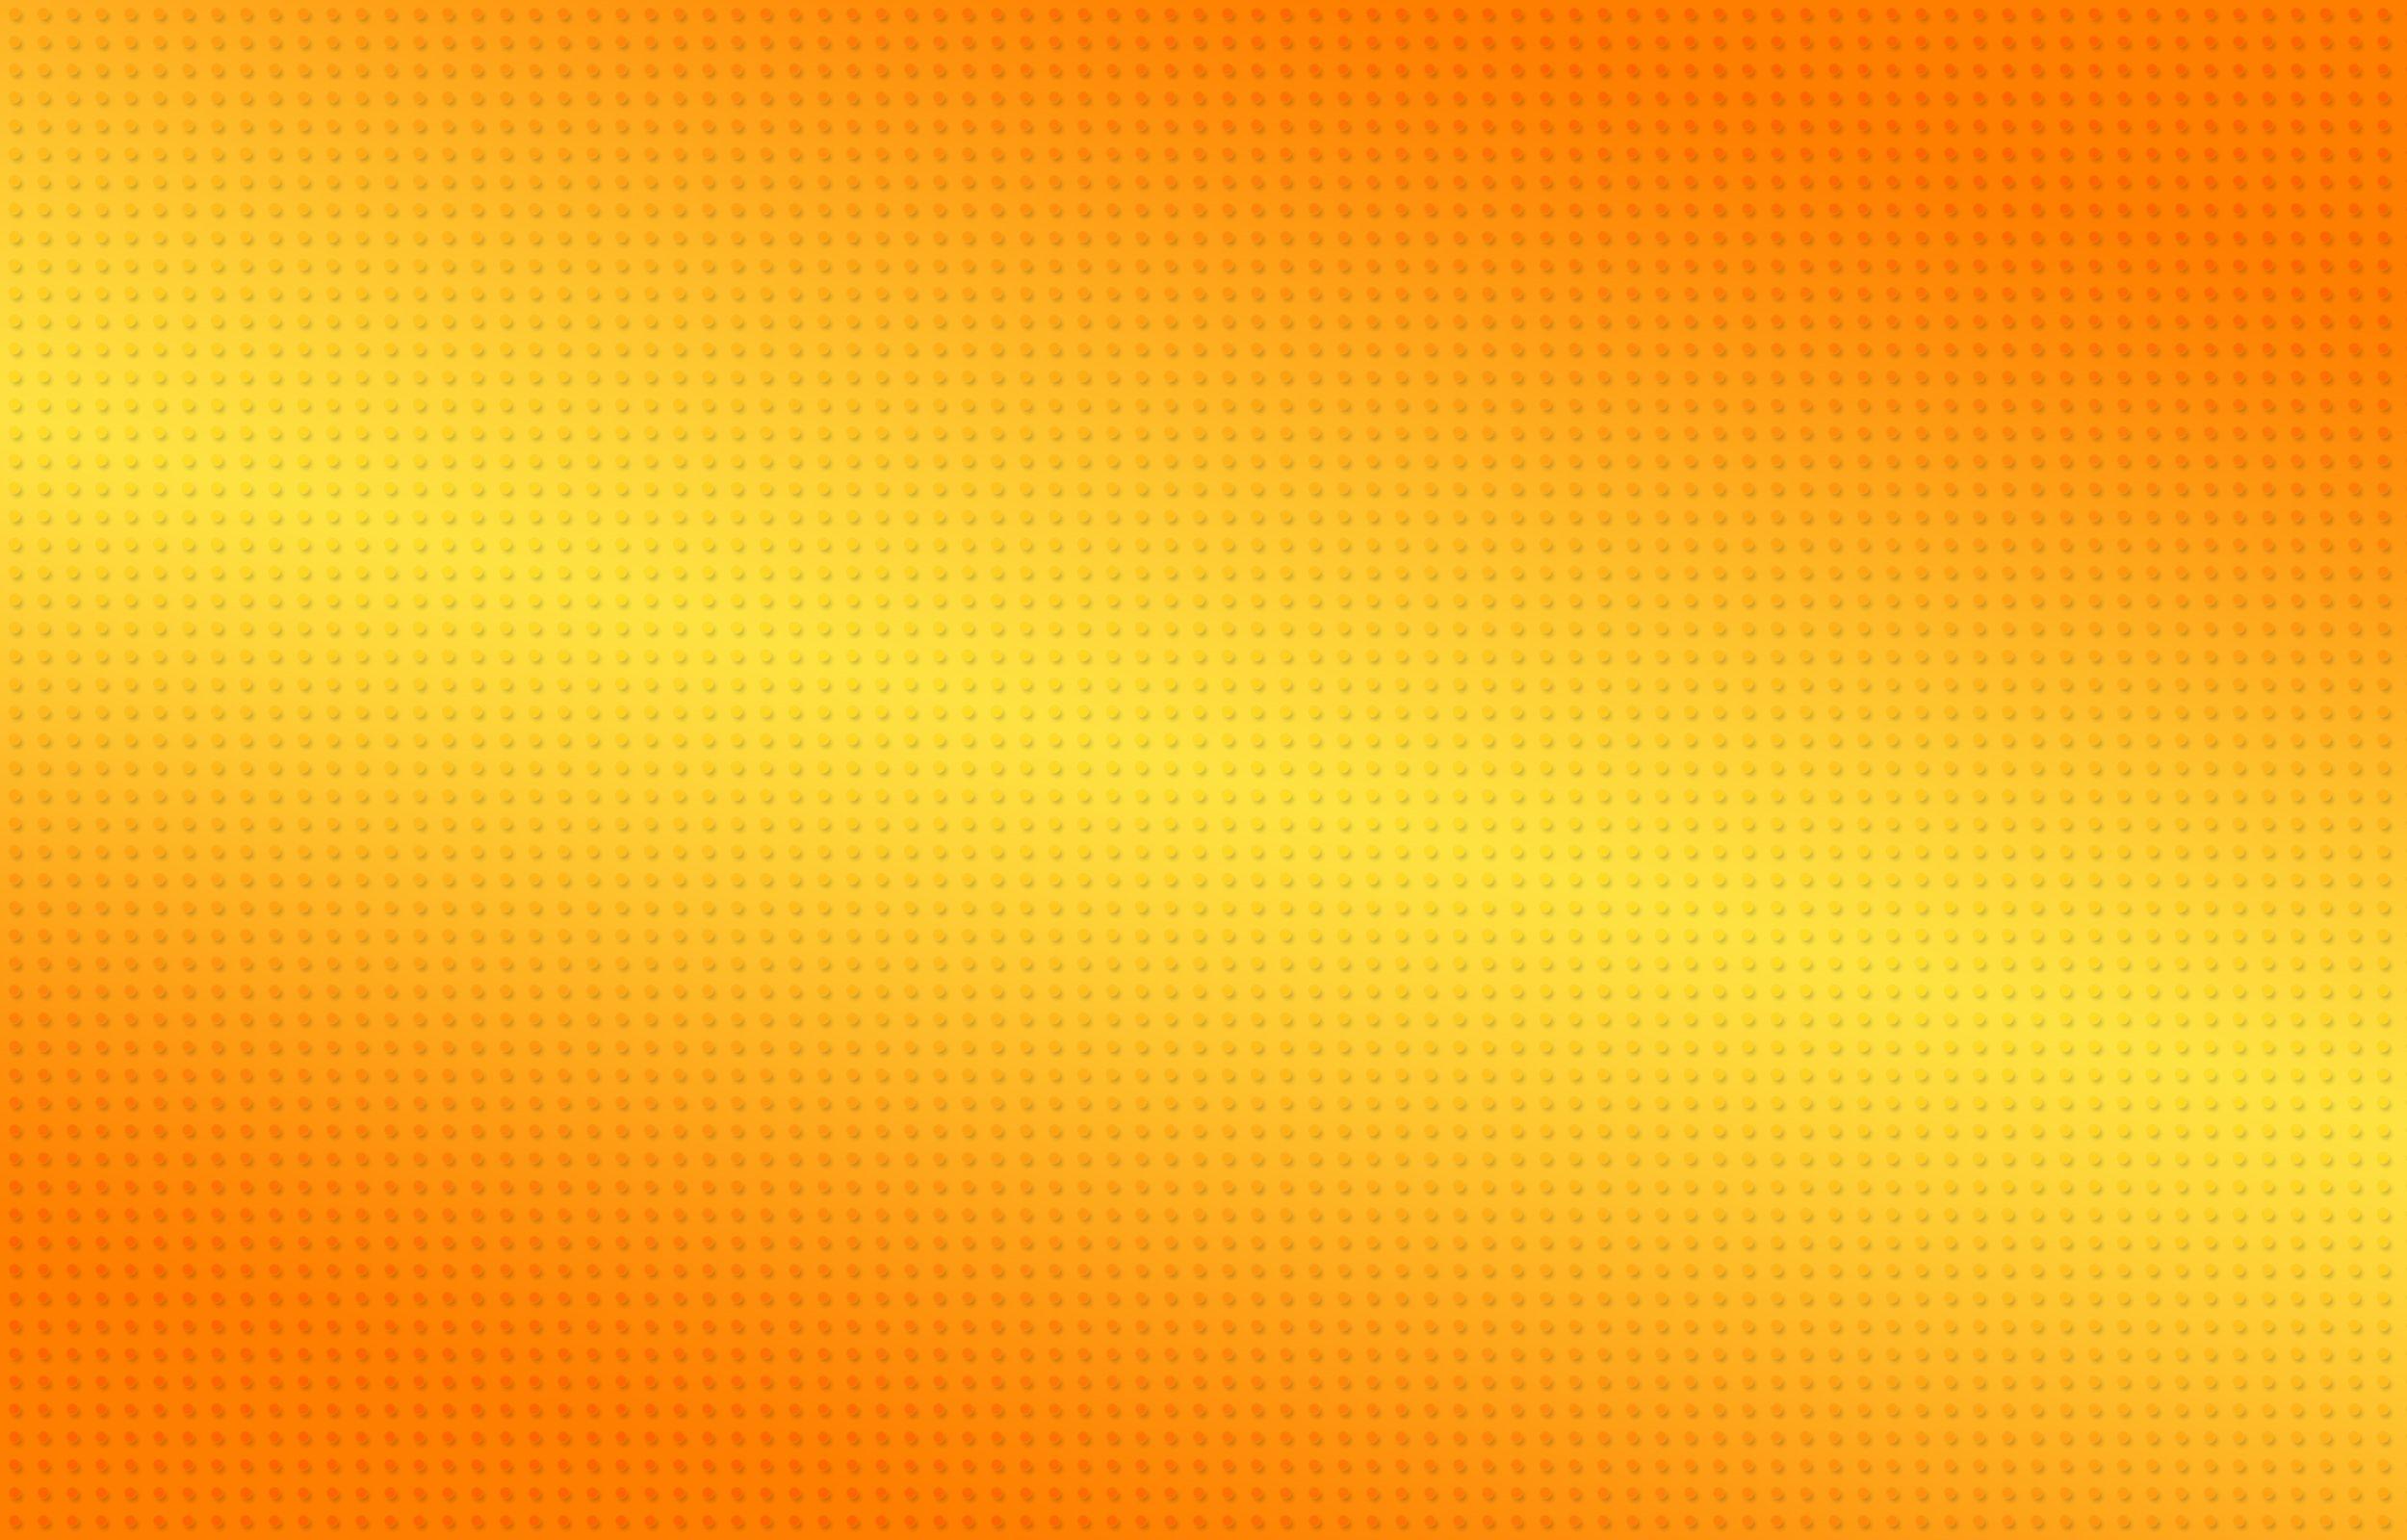 Orange Background Wallpaper 09307